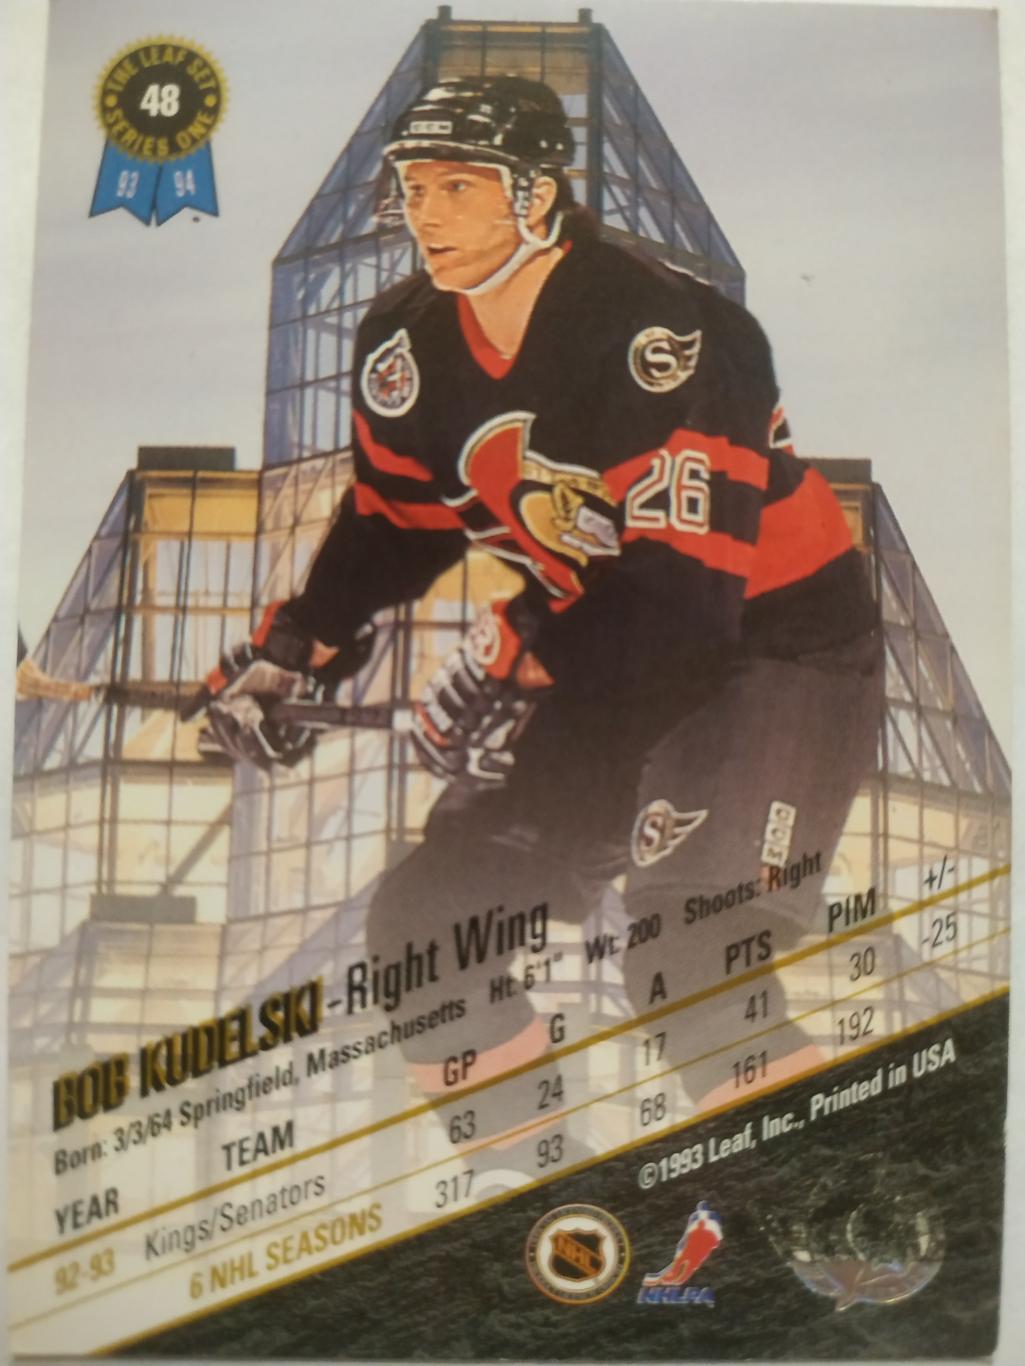 ХОККЕЙ КАРТОЧКА НХЛ LEAF SET SERIES ONE 1993-94 BOB KUDELSKI OTTAWA SENETORS #48 1